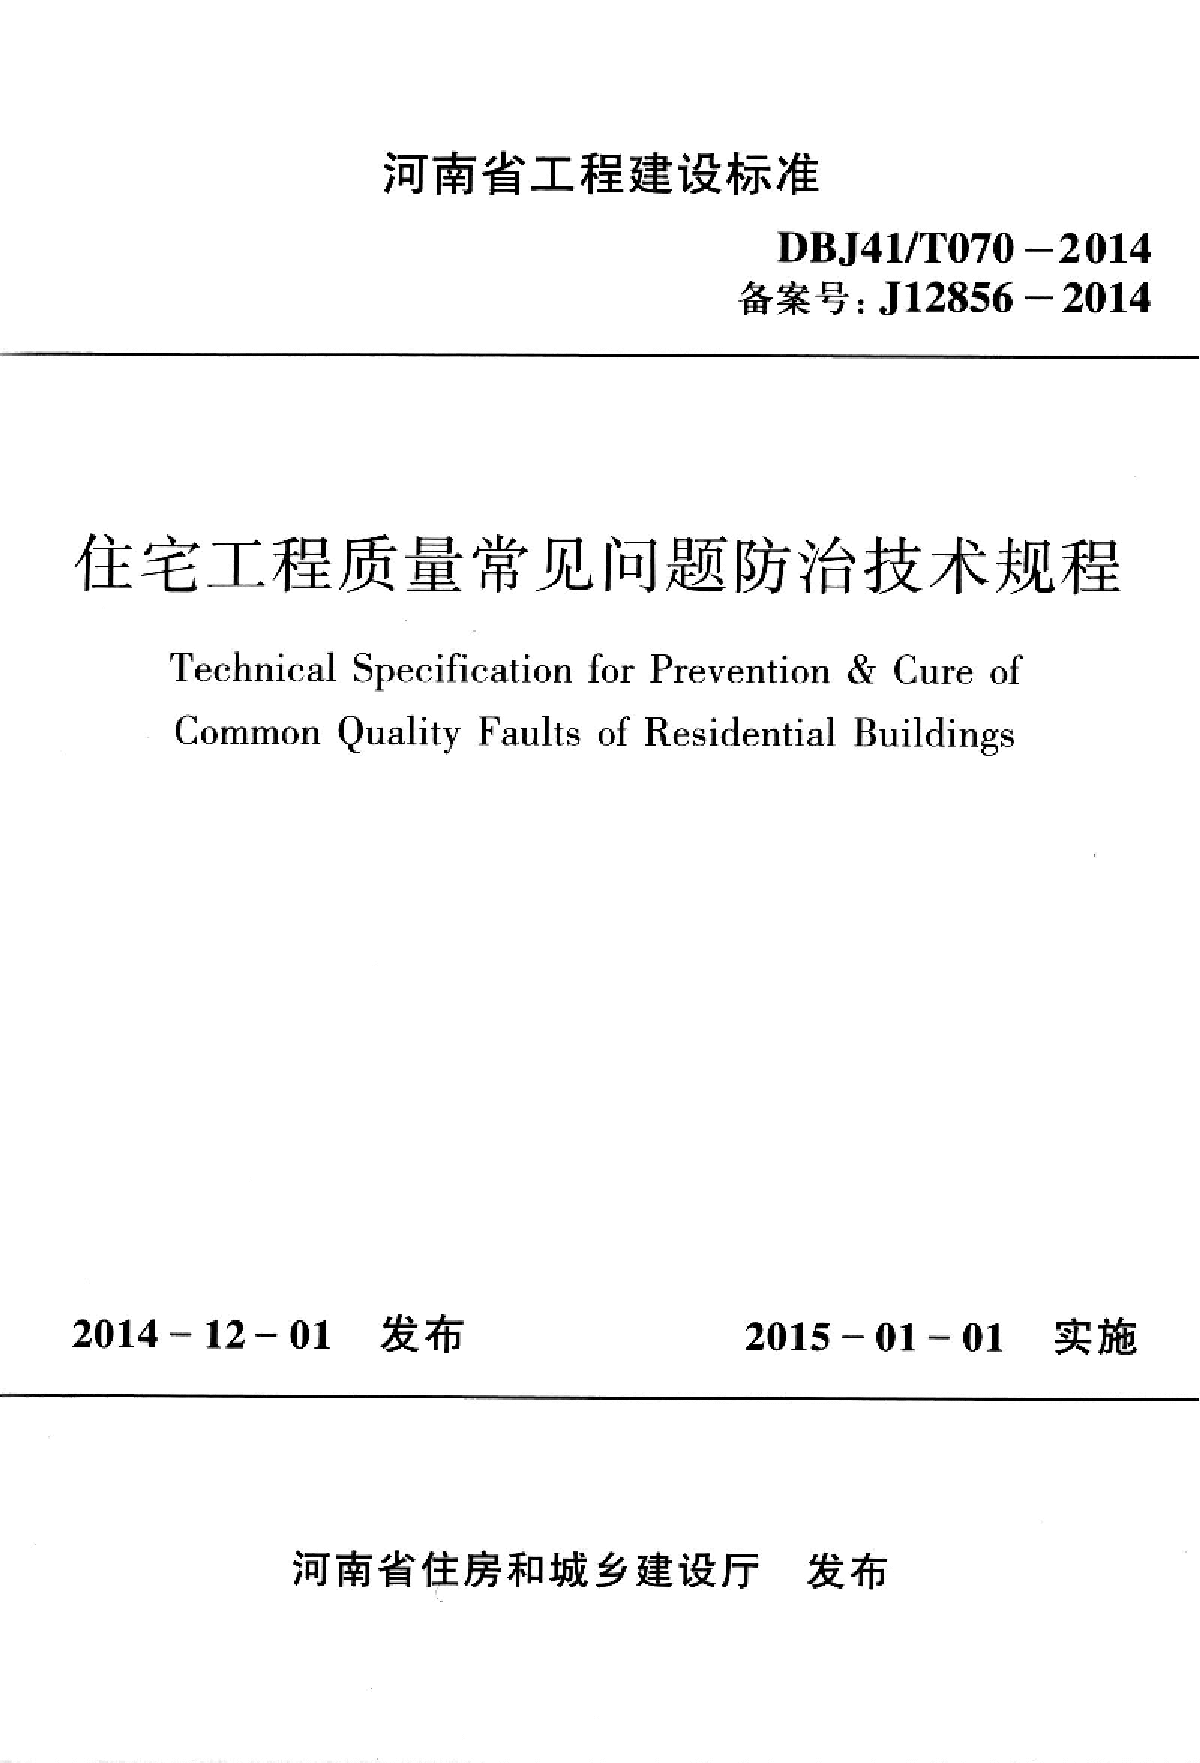 DBJ41/T070-2014河南省住宅工程质量常见问题防治技术规程.pdf-图一